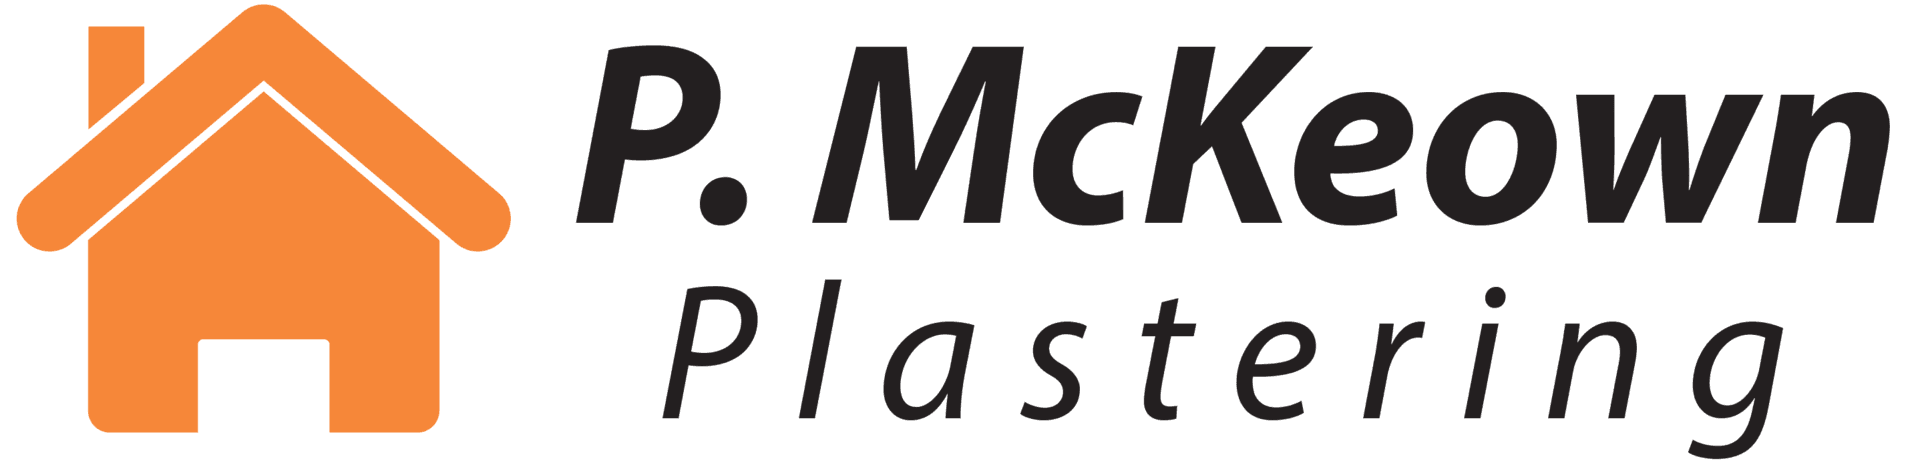 P McKeown Plastering company name